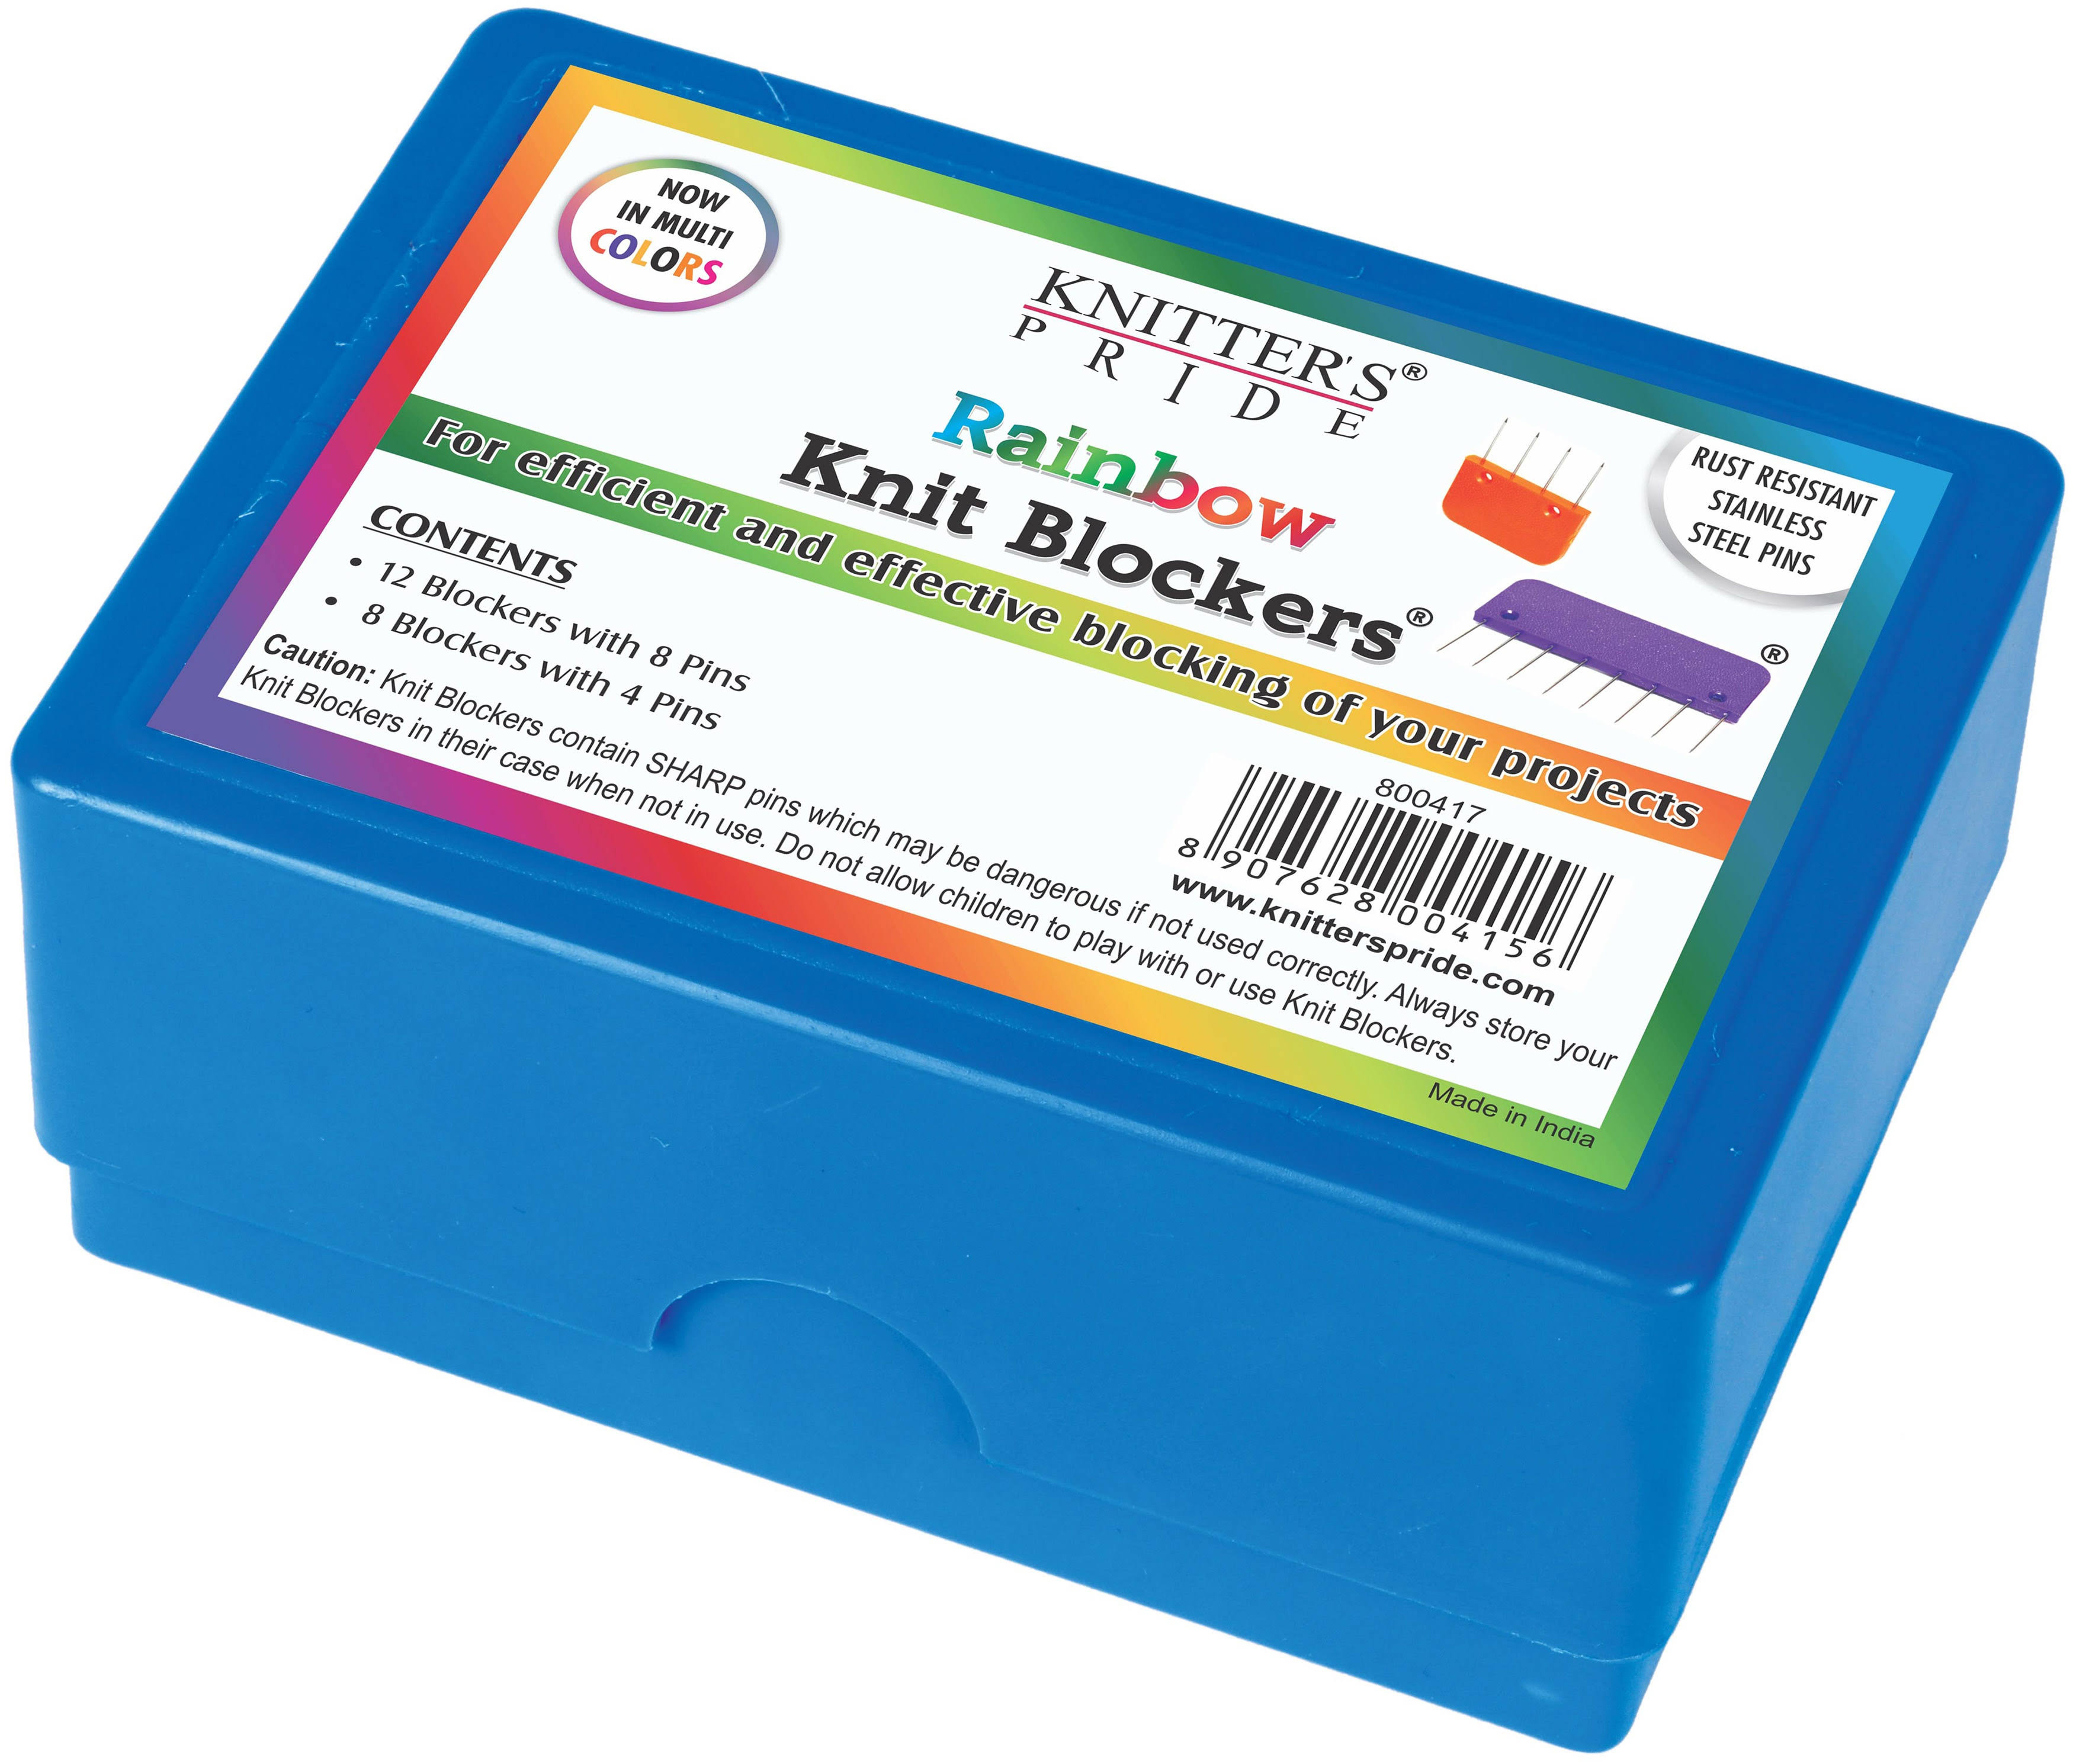 Knitter's Pride Rainbow Knit Blockers Package of 20